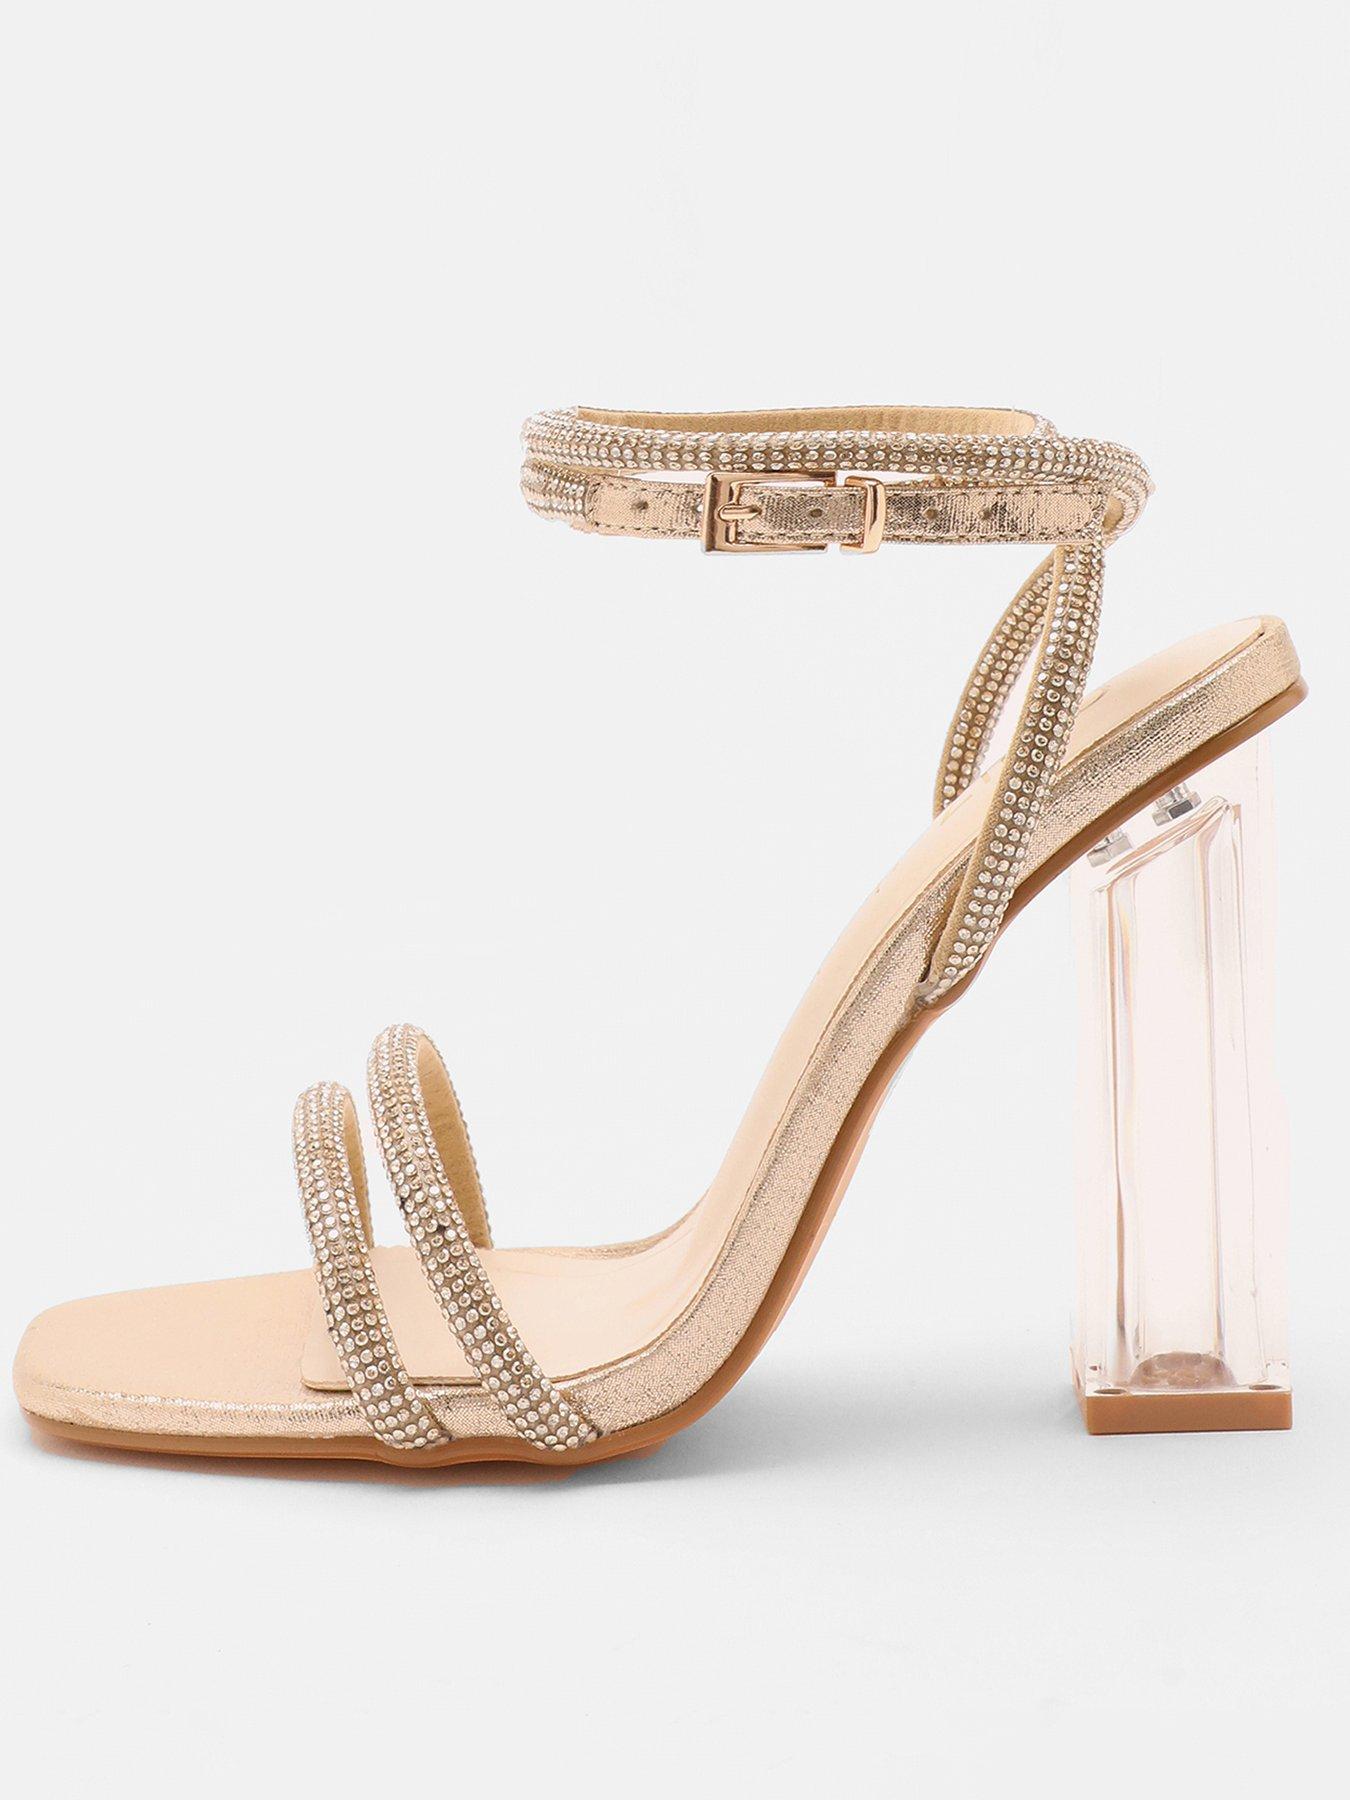 Luxury Customized Handmade medium heel 4inch Gold wedding shoes $289.30 |  Gold wedding shoes, Skateboard wedding, Wedding shoes